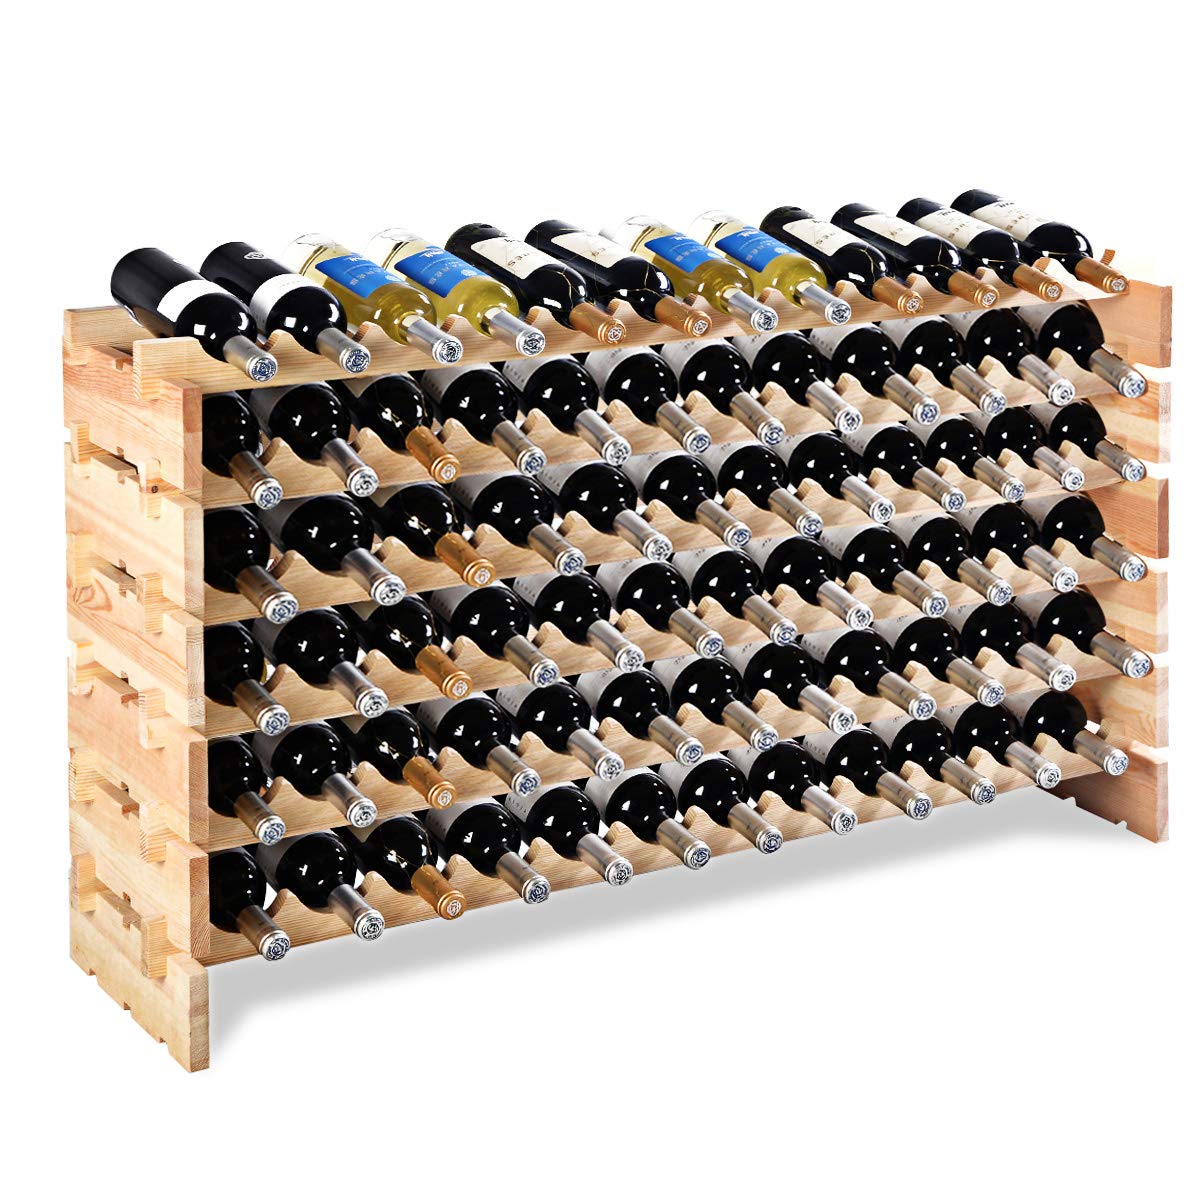 Giantex 72 Bottle Wine Rack Modular Bottle Display Shelves Wood Stackable Storage